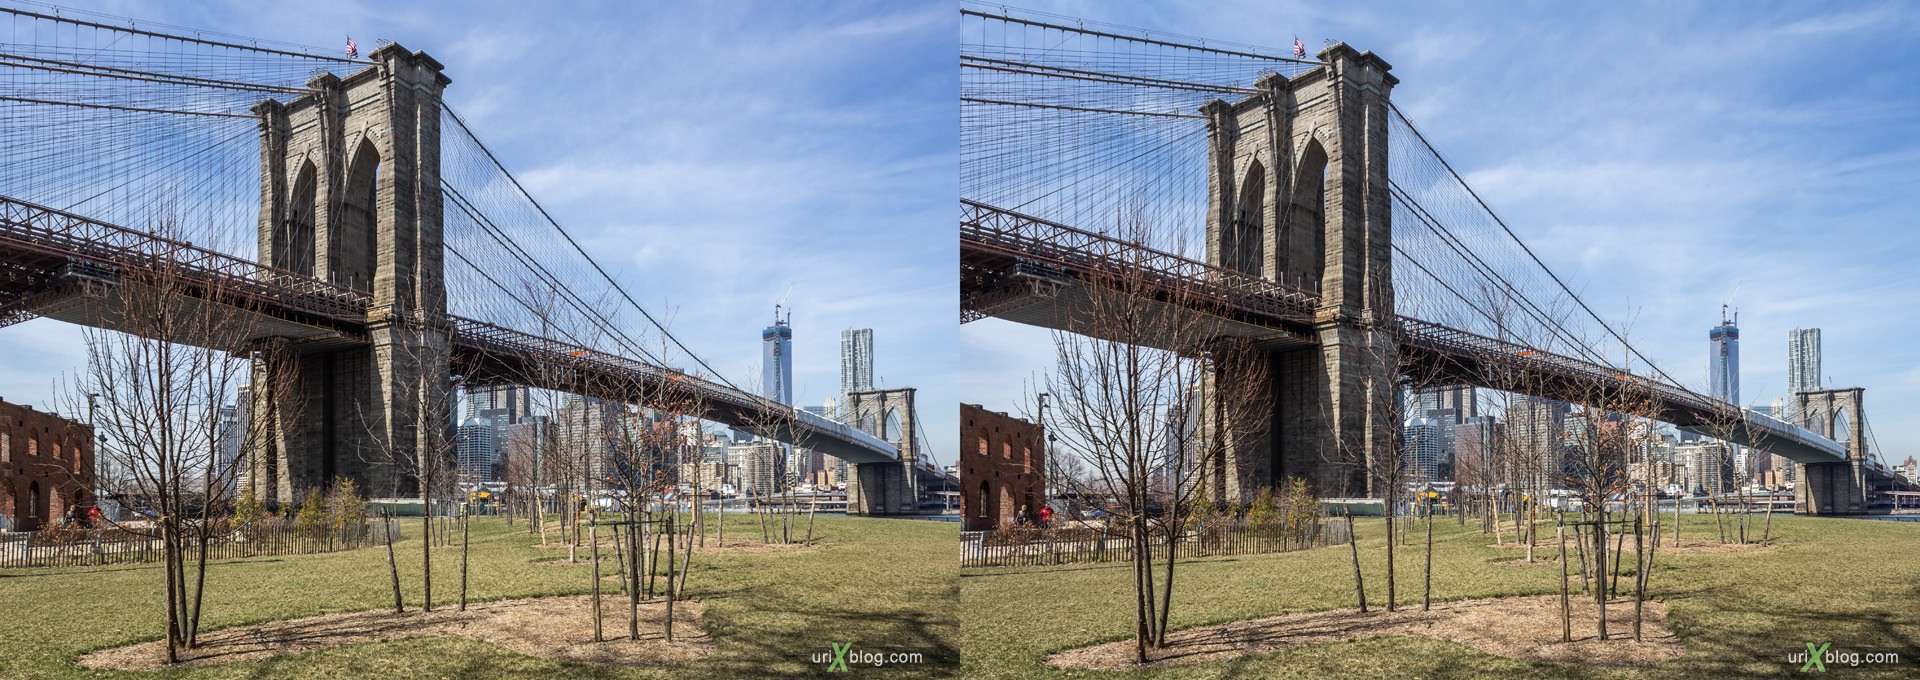 2013, Brooklyn Bridge park, NYC, New York City, USA, 3D, stereo pair, cross-eyed, crossview, cross view stereo pair, stereoscopic